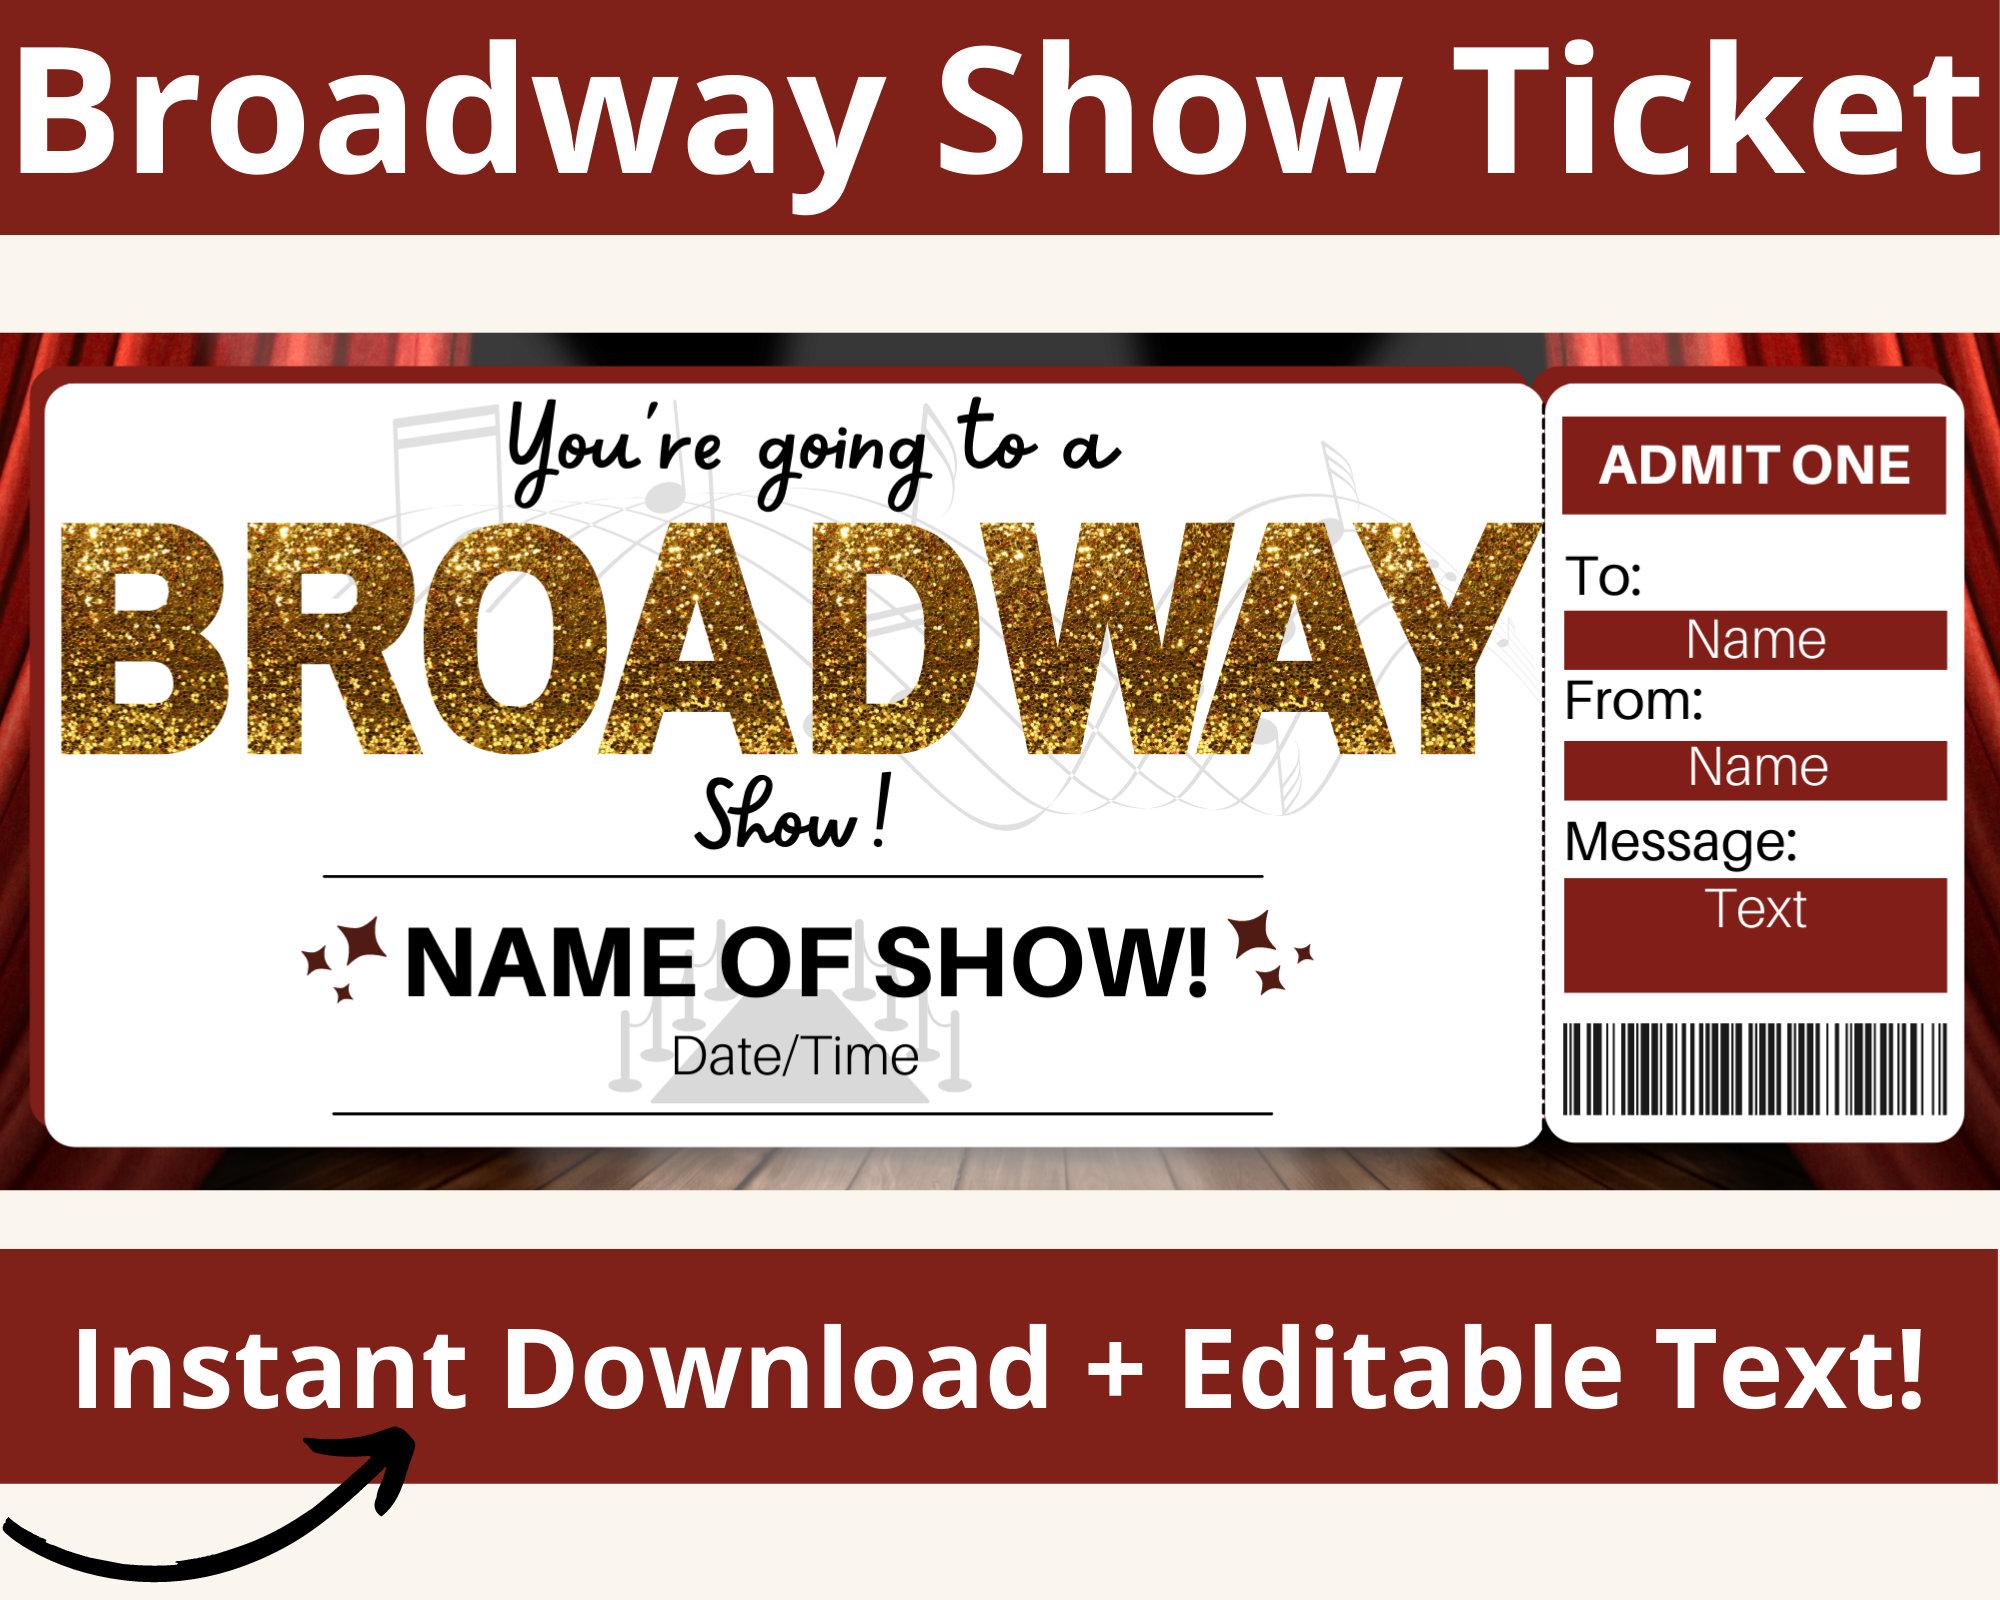 Ticket Hound for Broadway shows